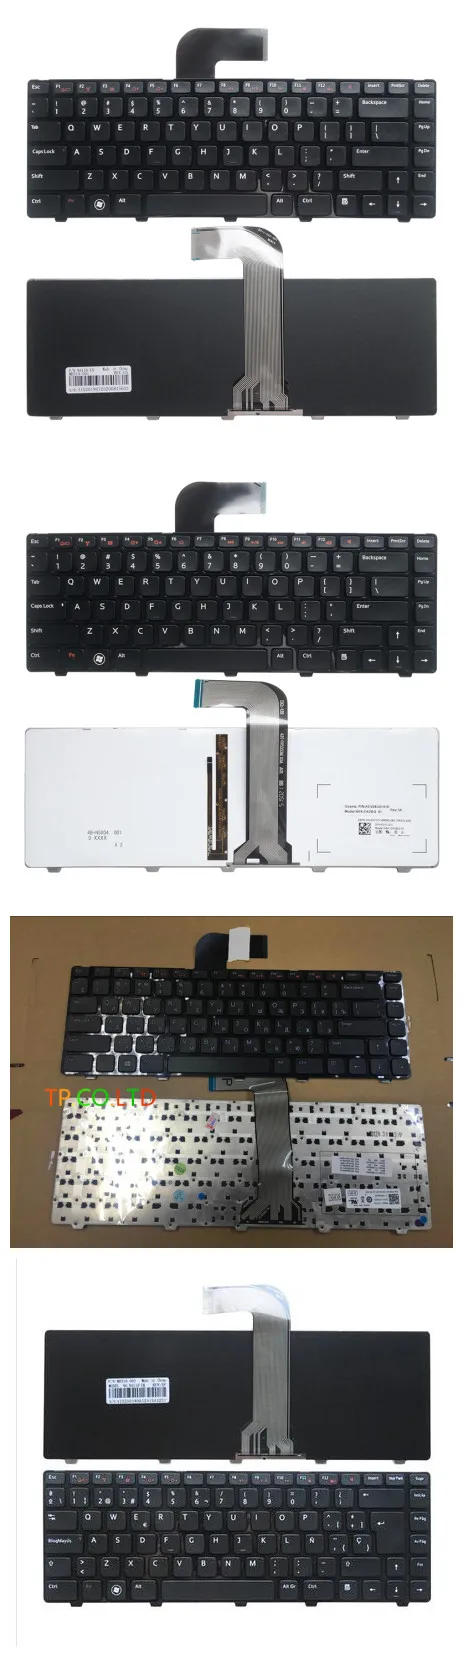 US/Spanish/Russian Keyboard for DELL INSPIRON 14R N4110 N4120 M4110 N4050 M4040 M5040 N5040 N5050 3420 5420 5425 5520 7420